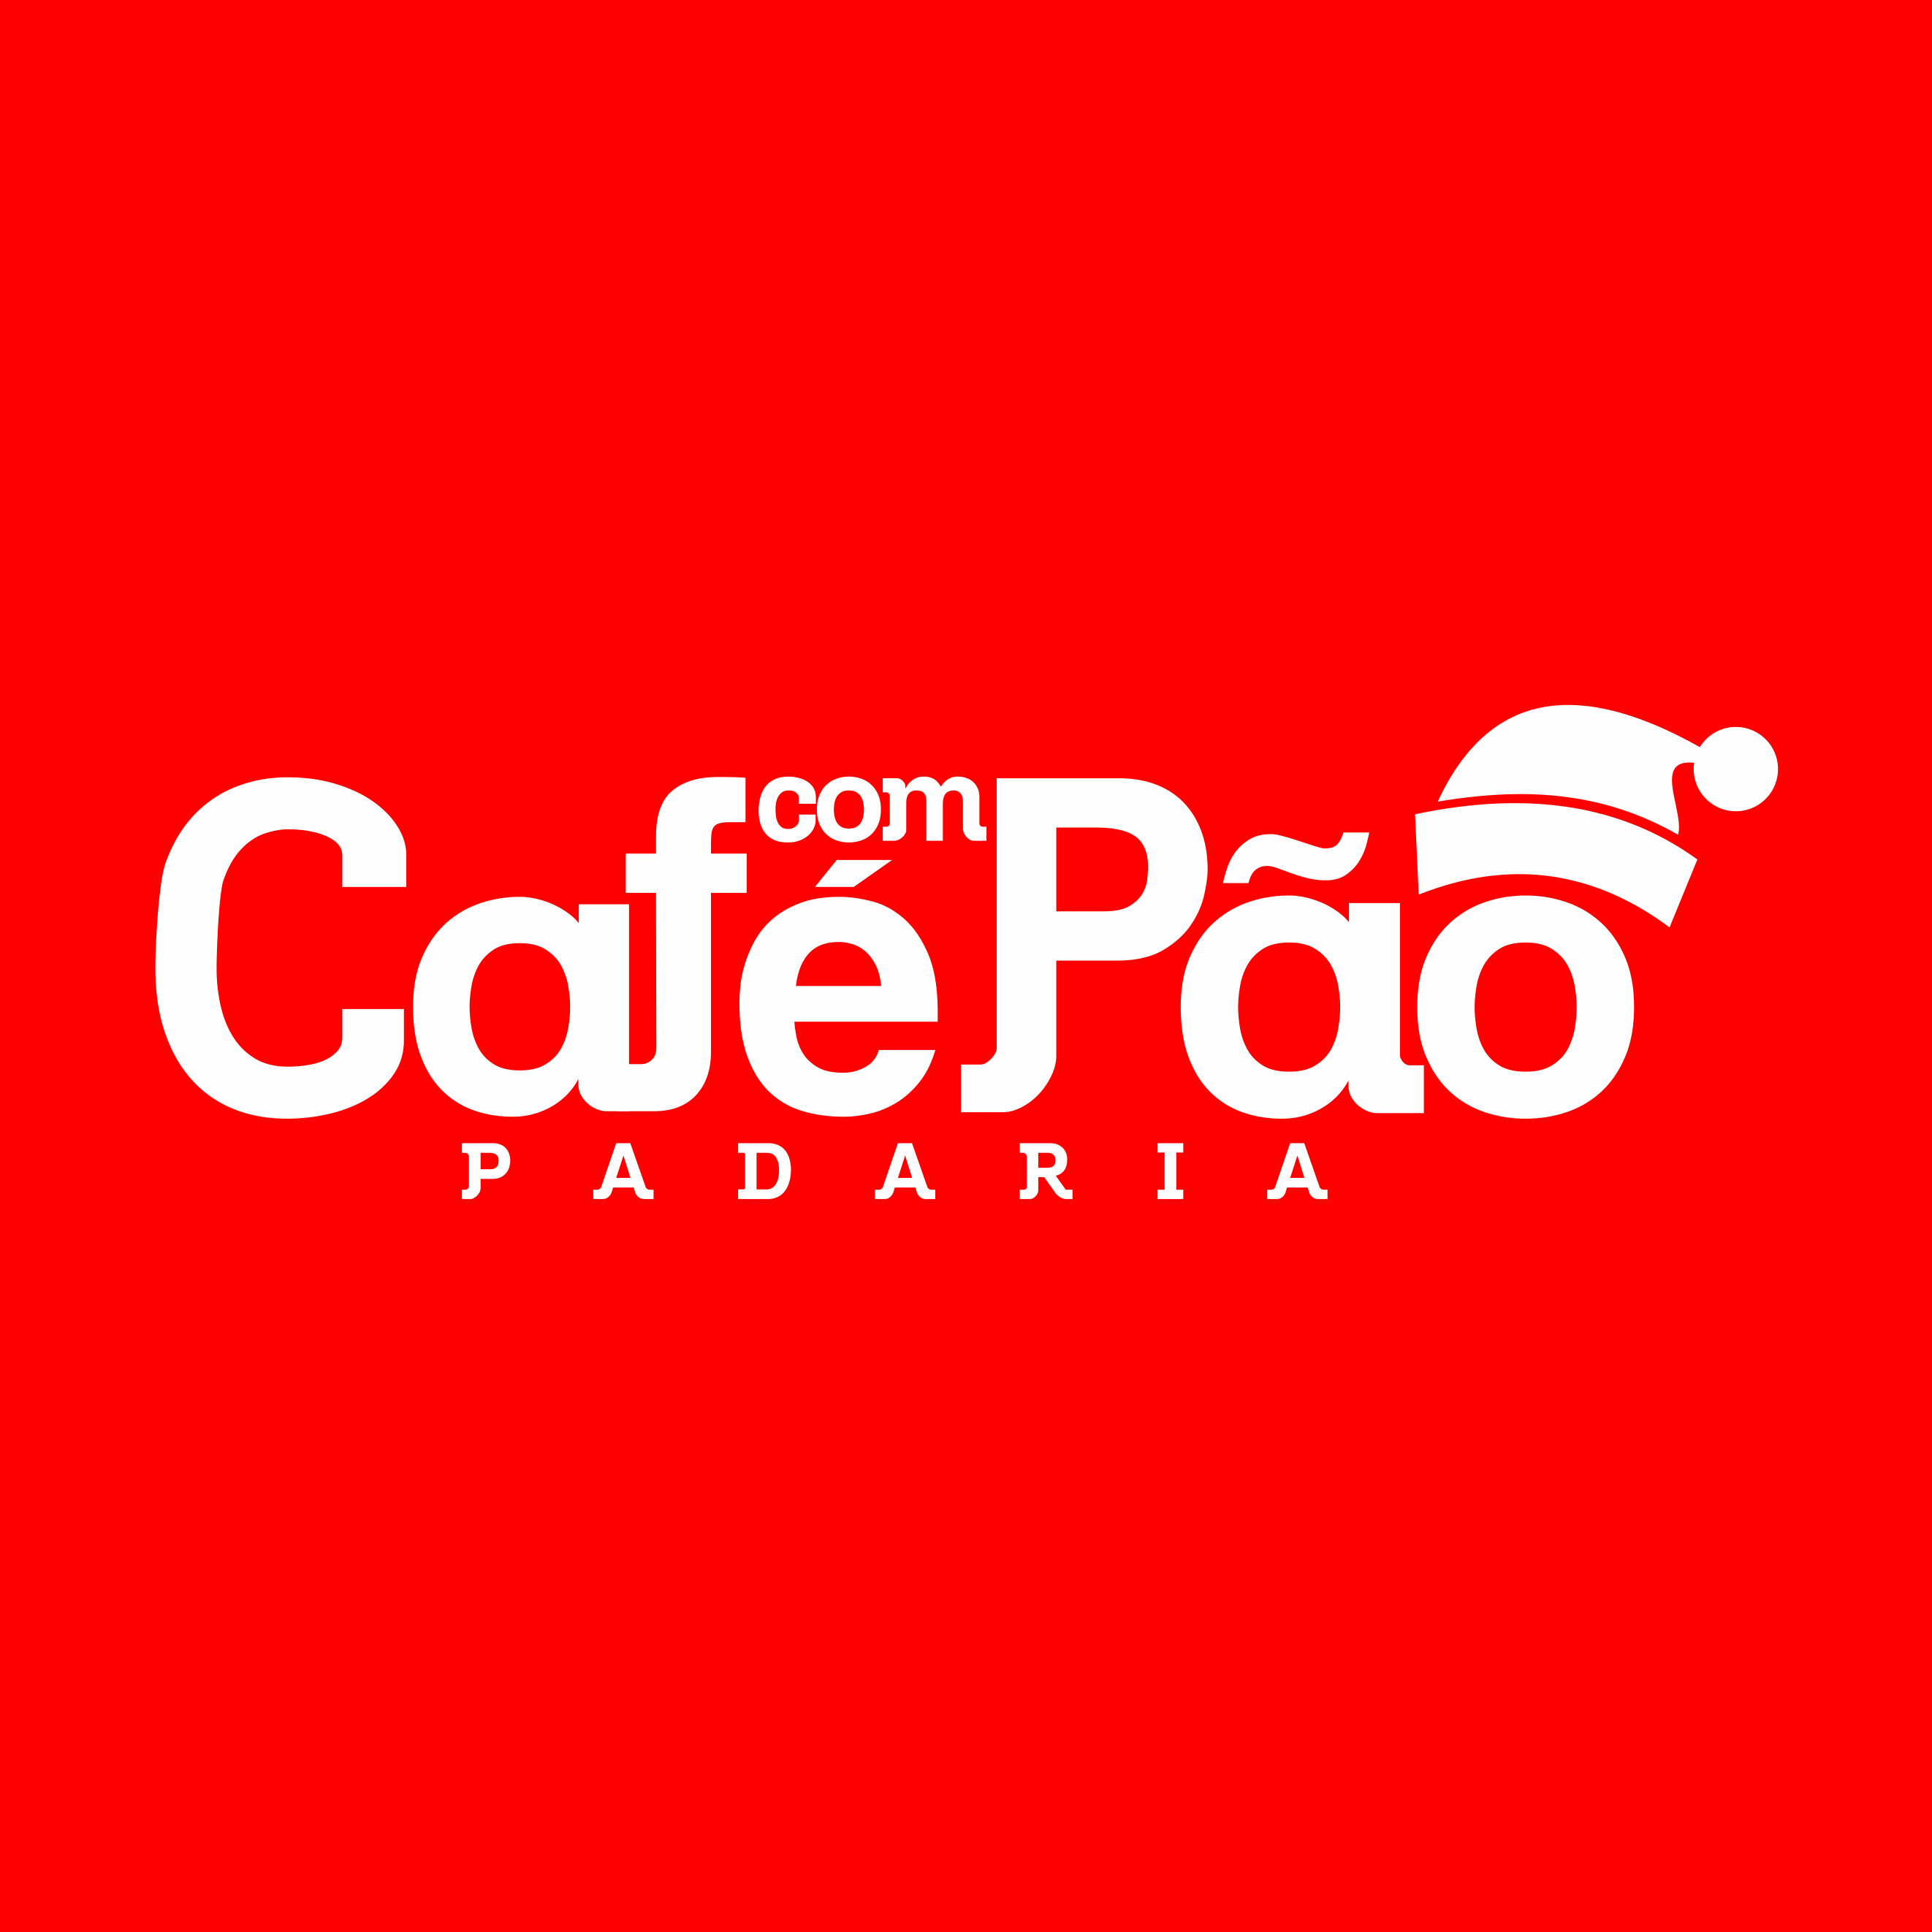 Pao Pao Cafe